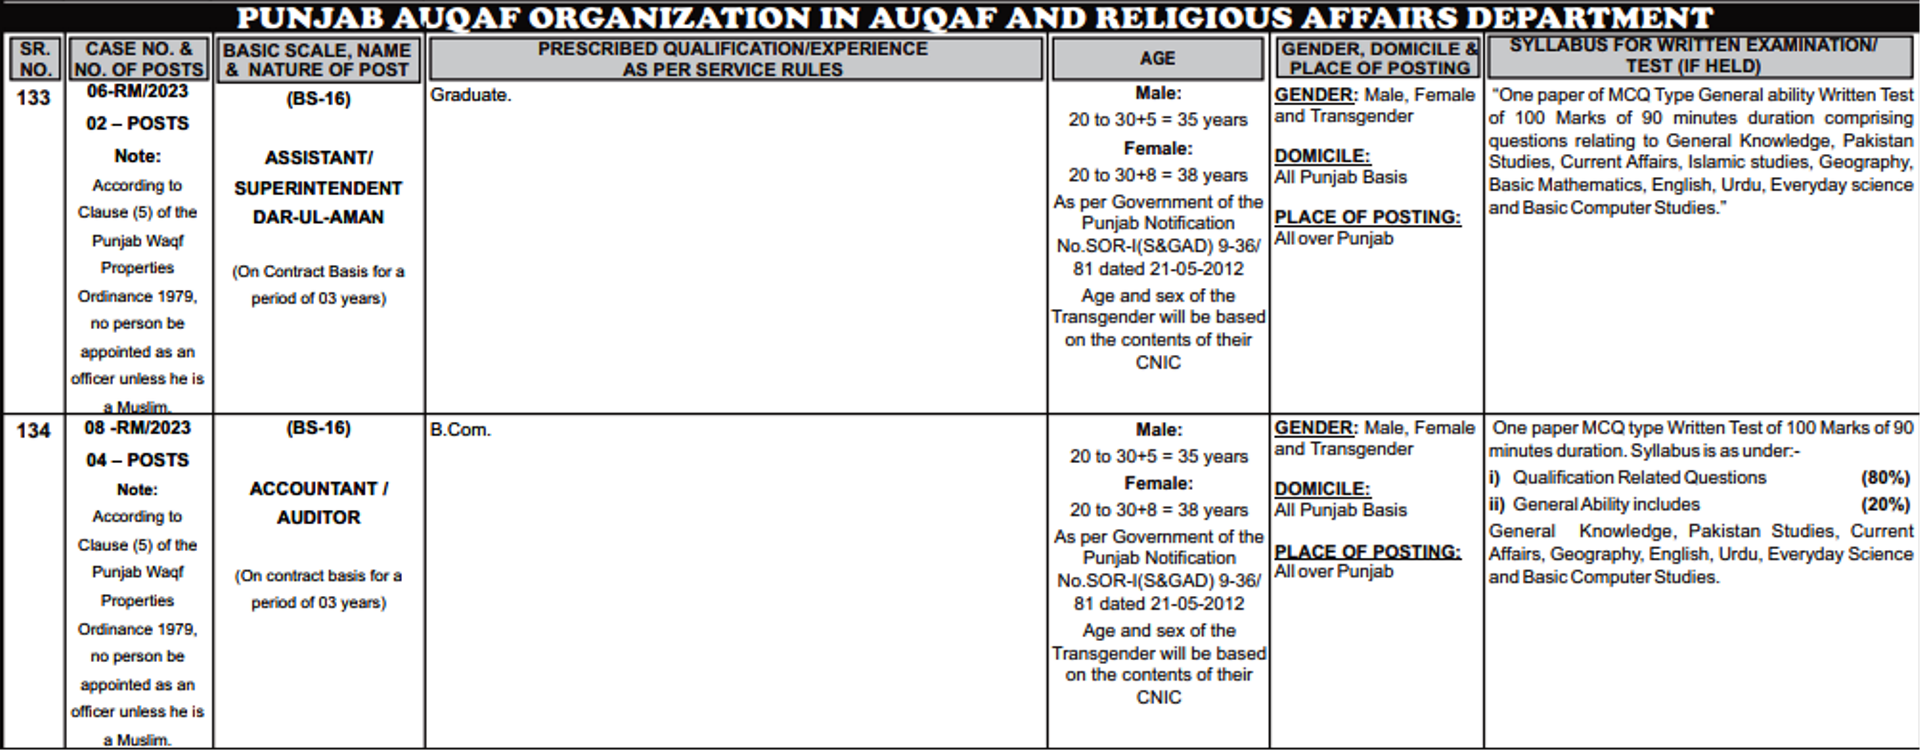 the Punjab Auqaf Organization